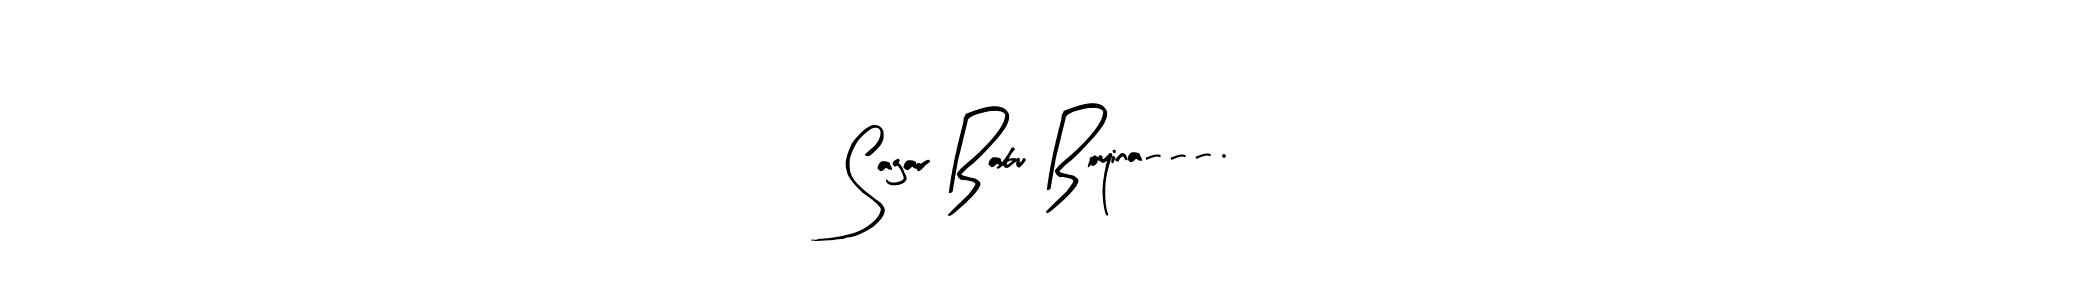 Make a beautiful signature design for name Sagar Babu Boyina---.. Use this online signature maker to create a handwritten signature for free. Sagar Babu Boyina---. signature style 8 images and pictures png